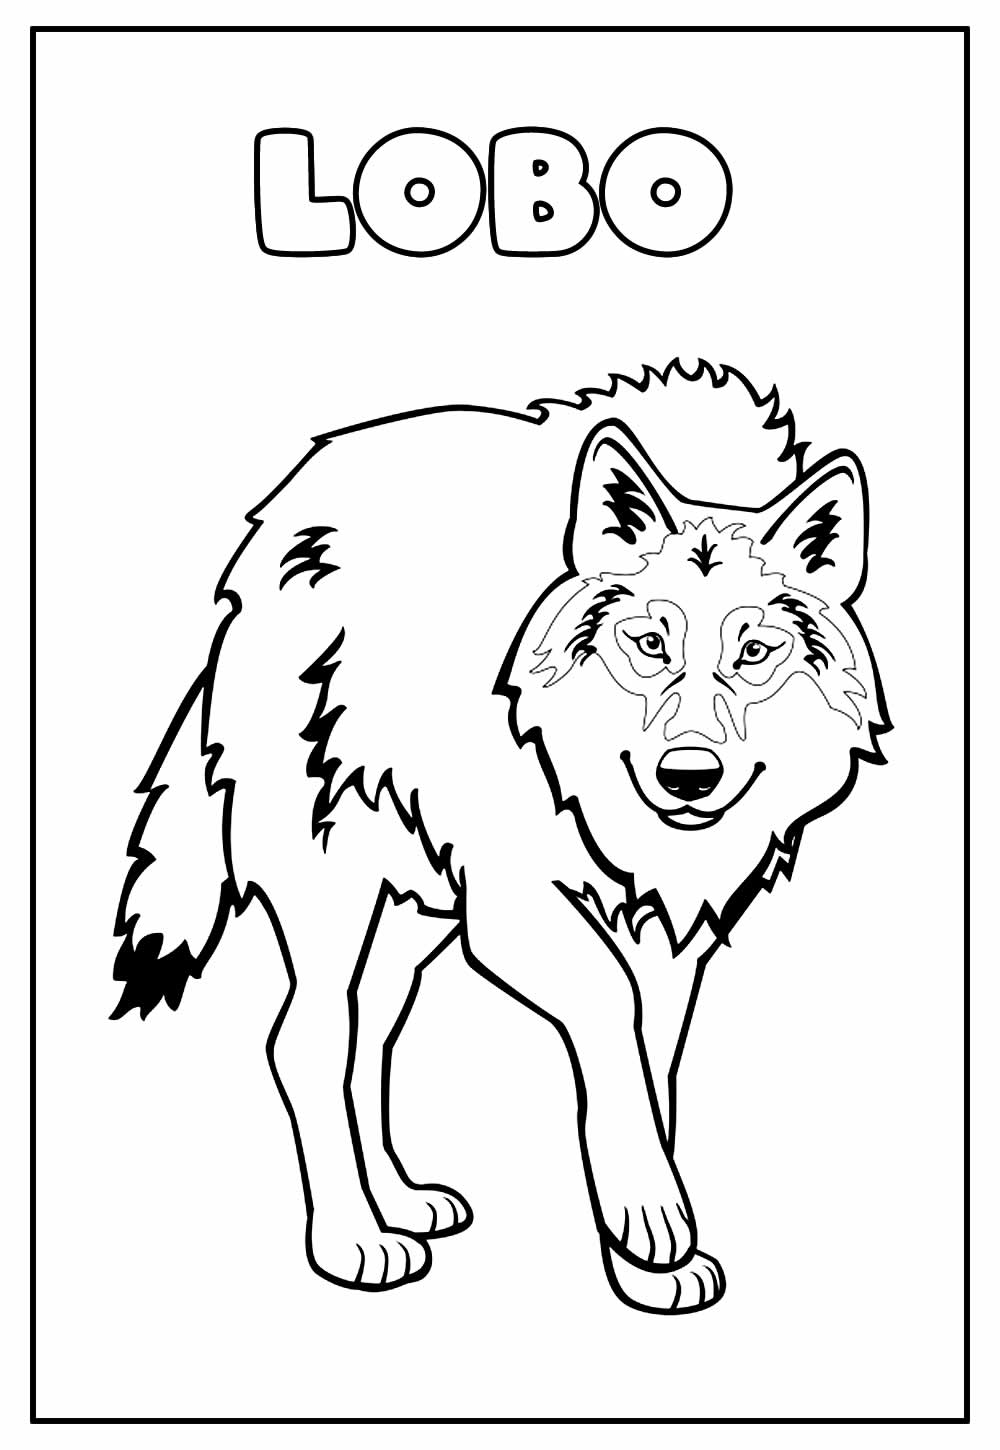 Desenho Educativo para Colorir de Lobo